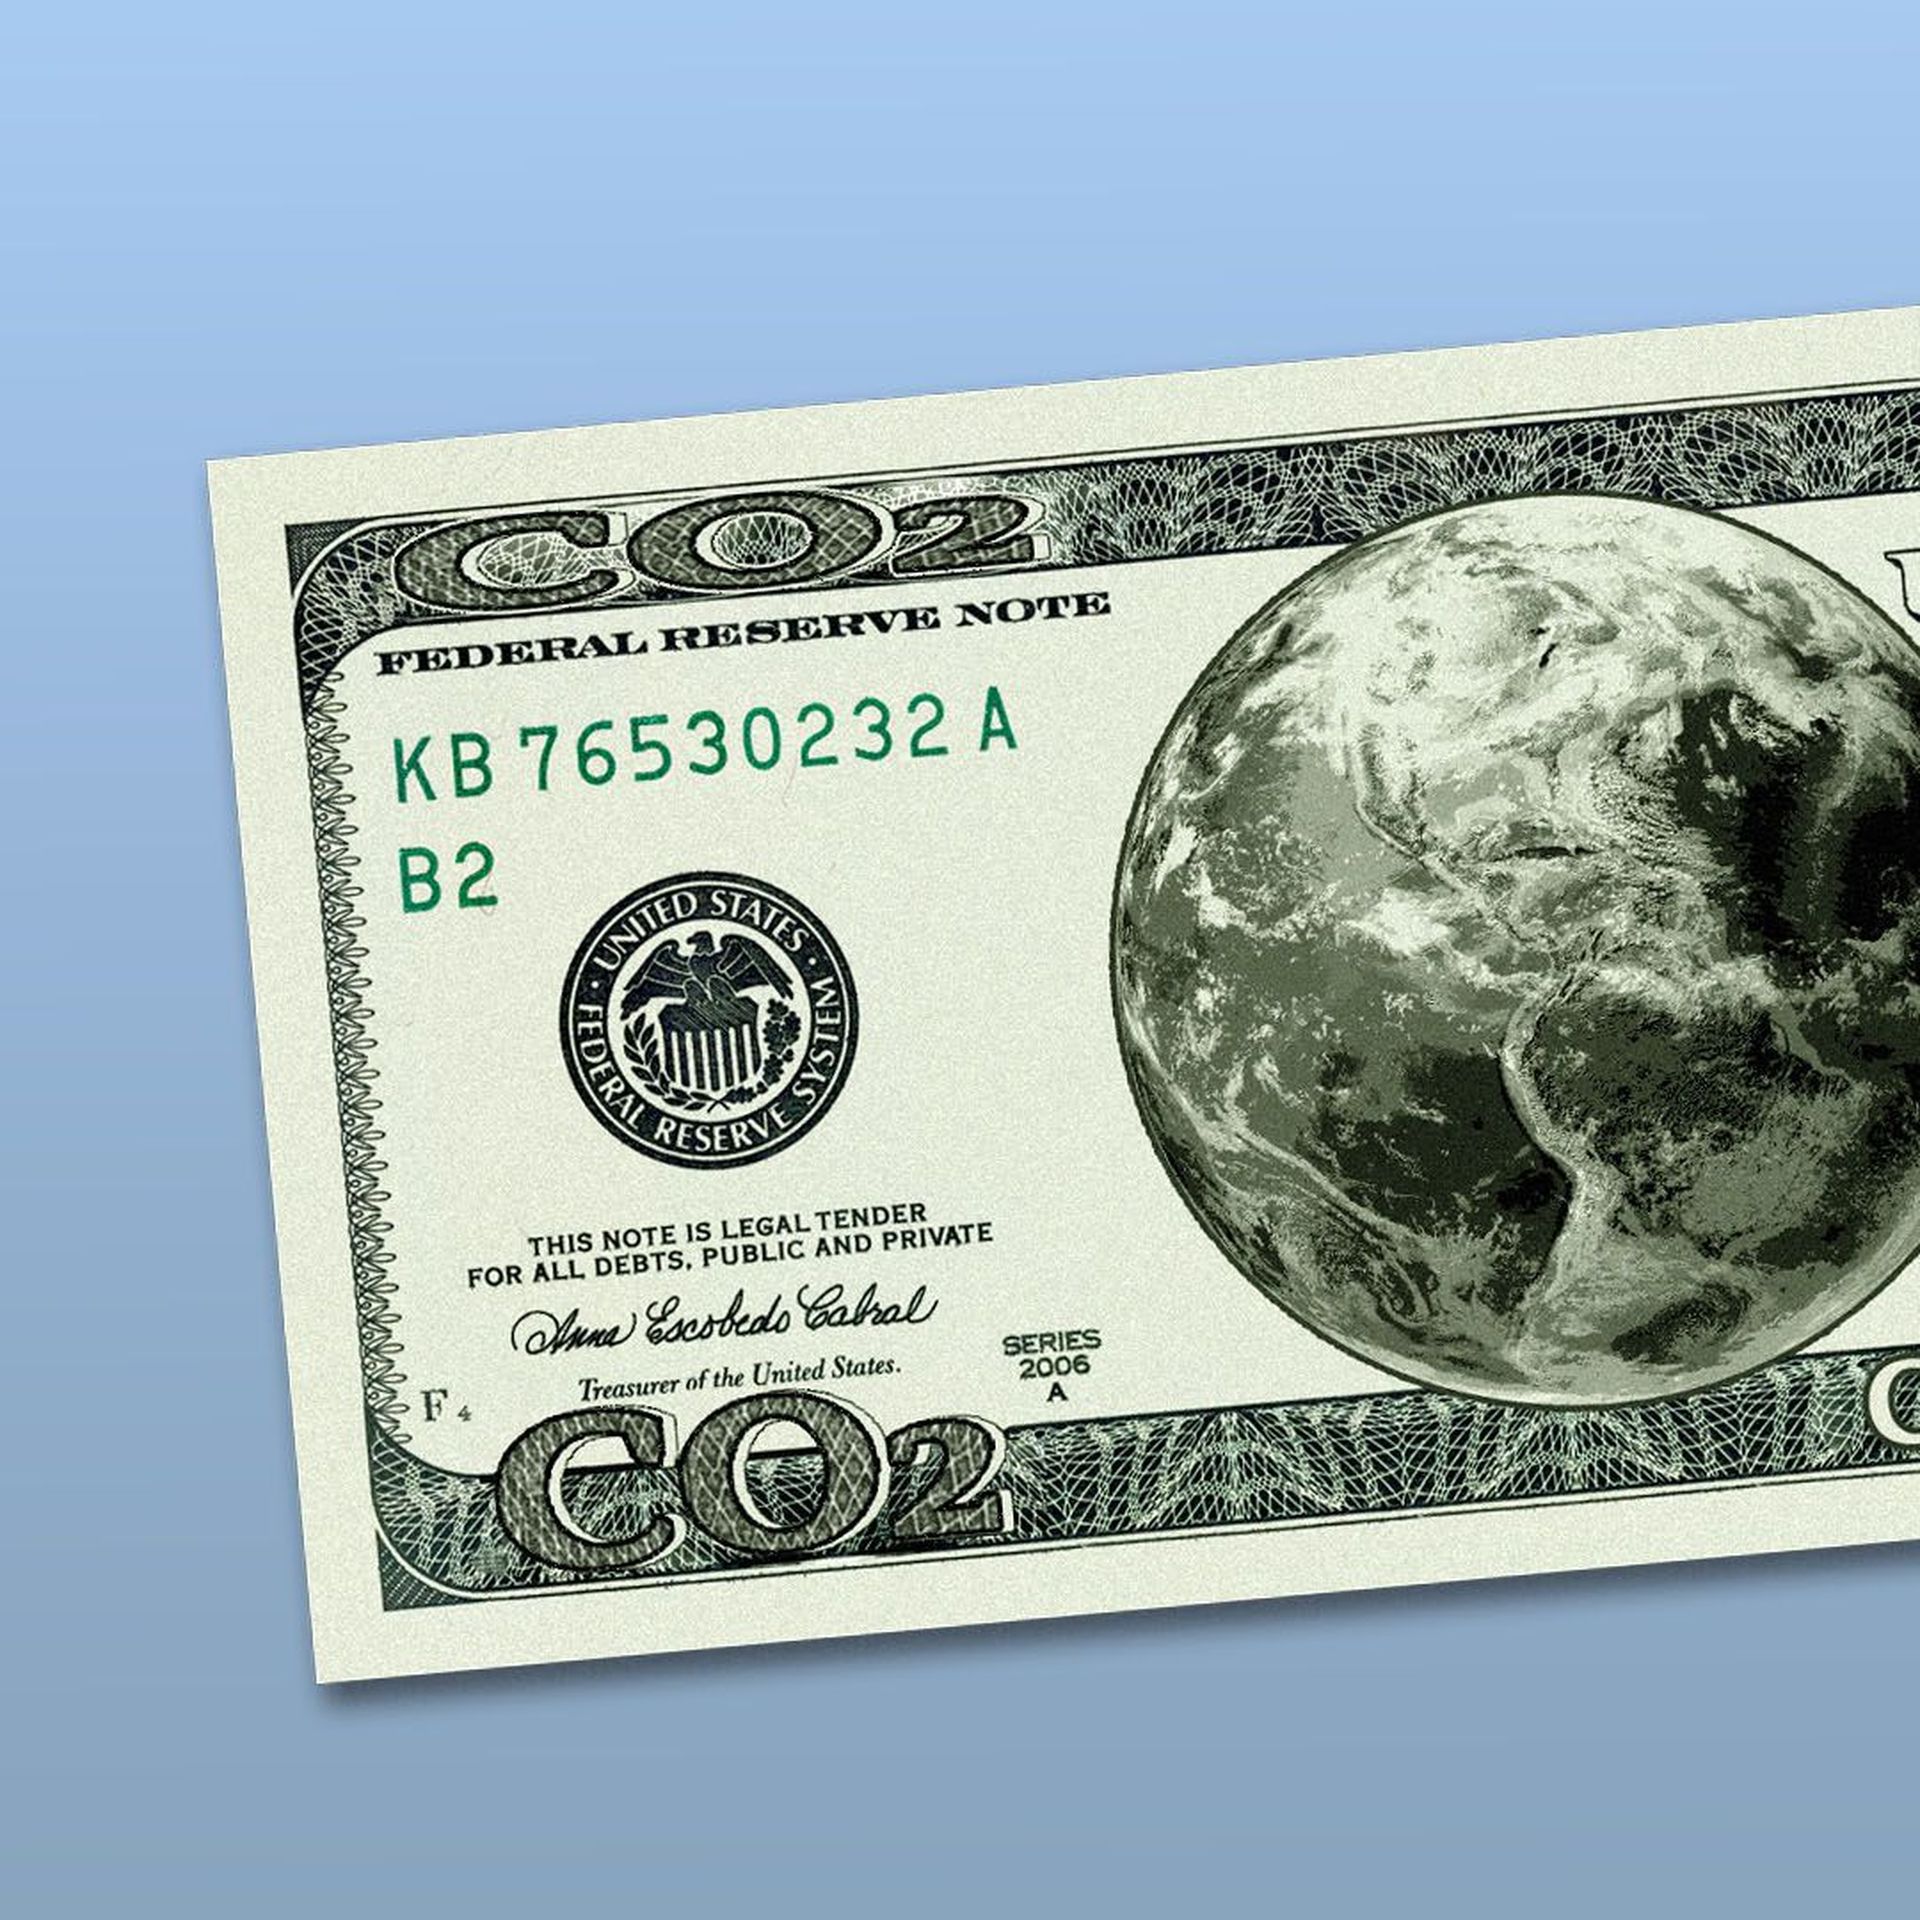 CO2 overlaid on US dollar bill format